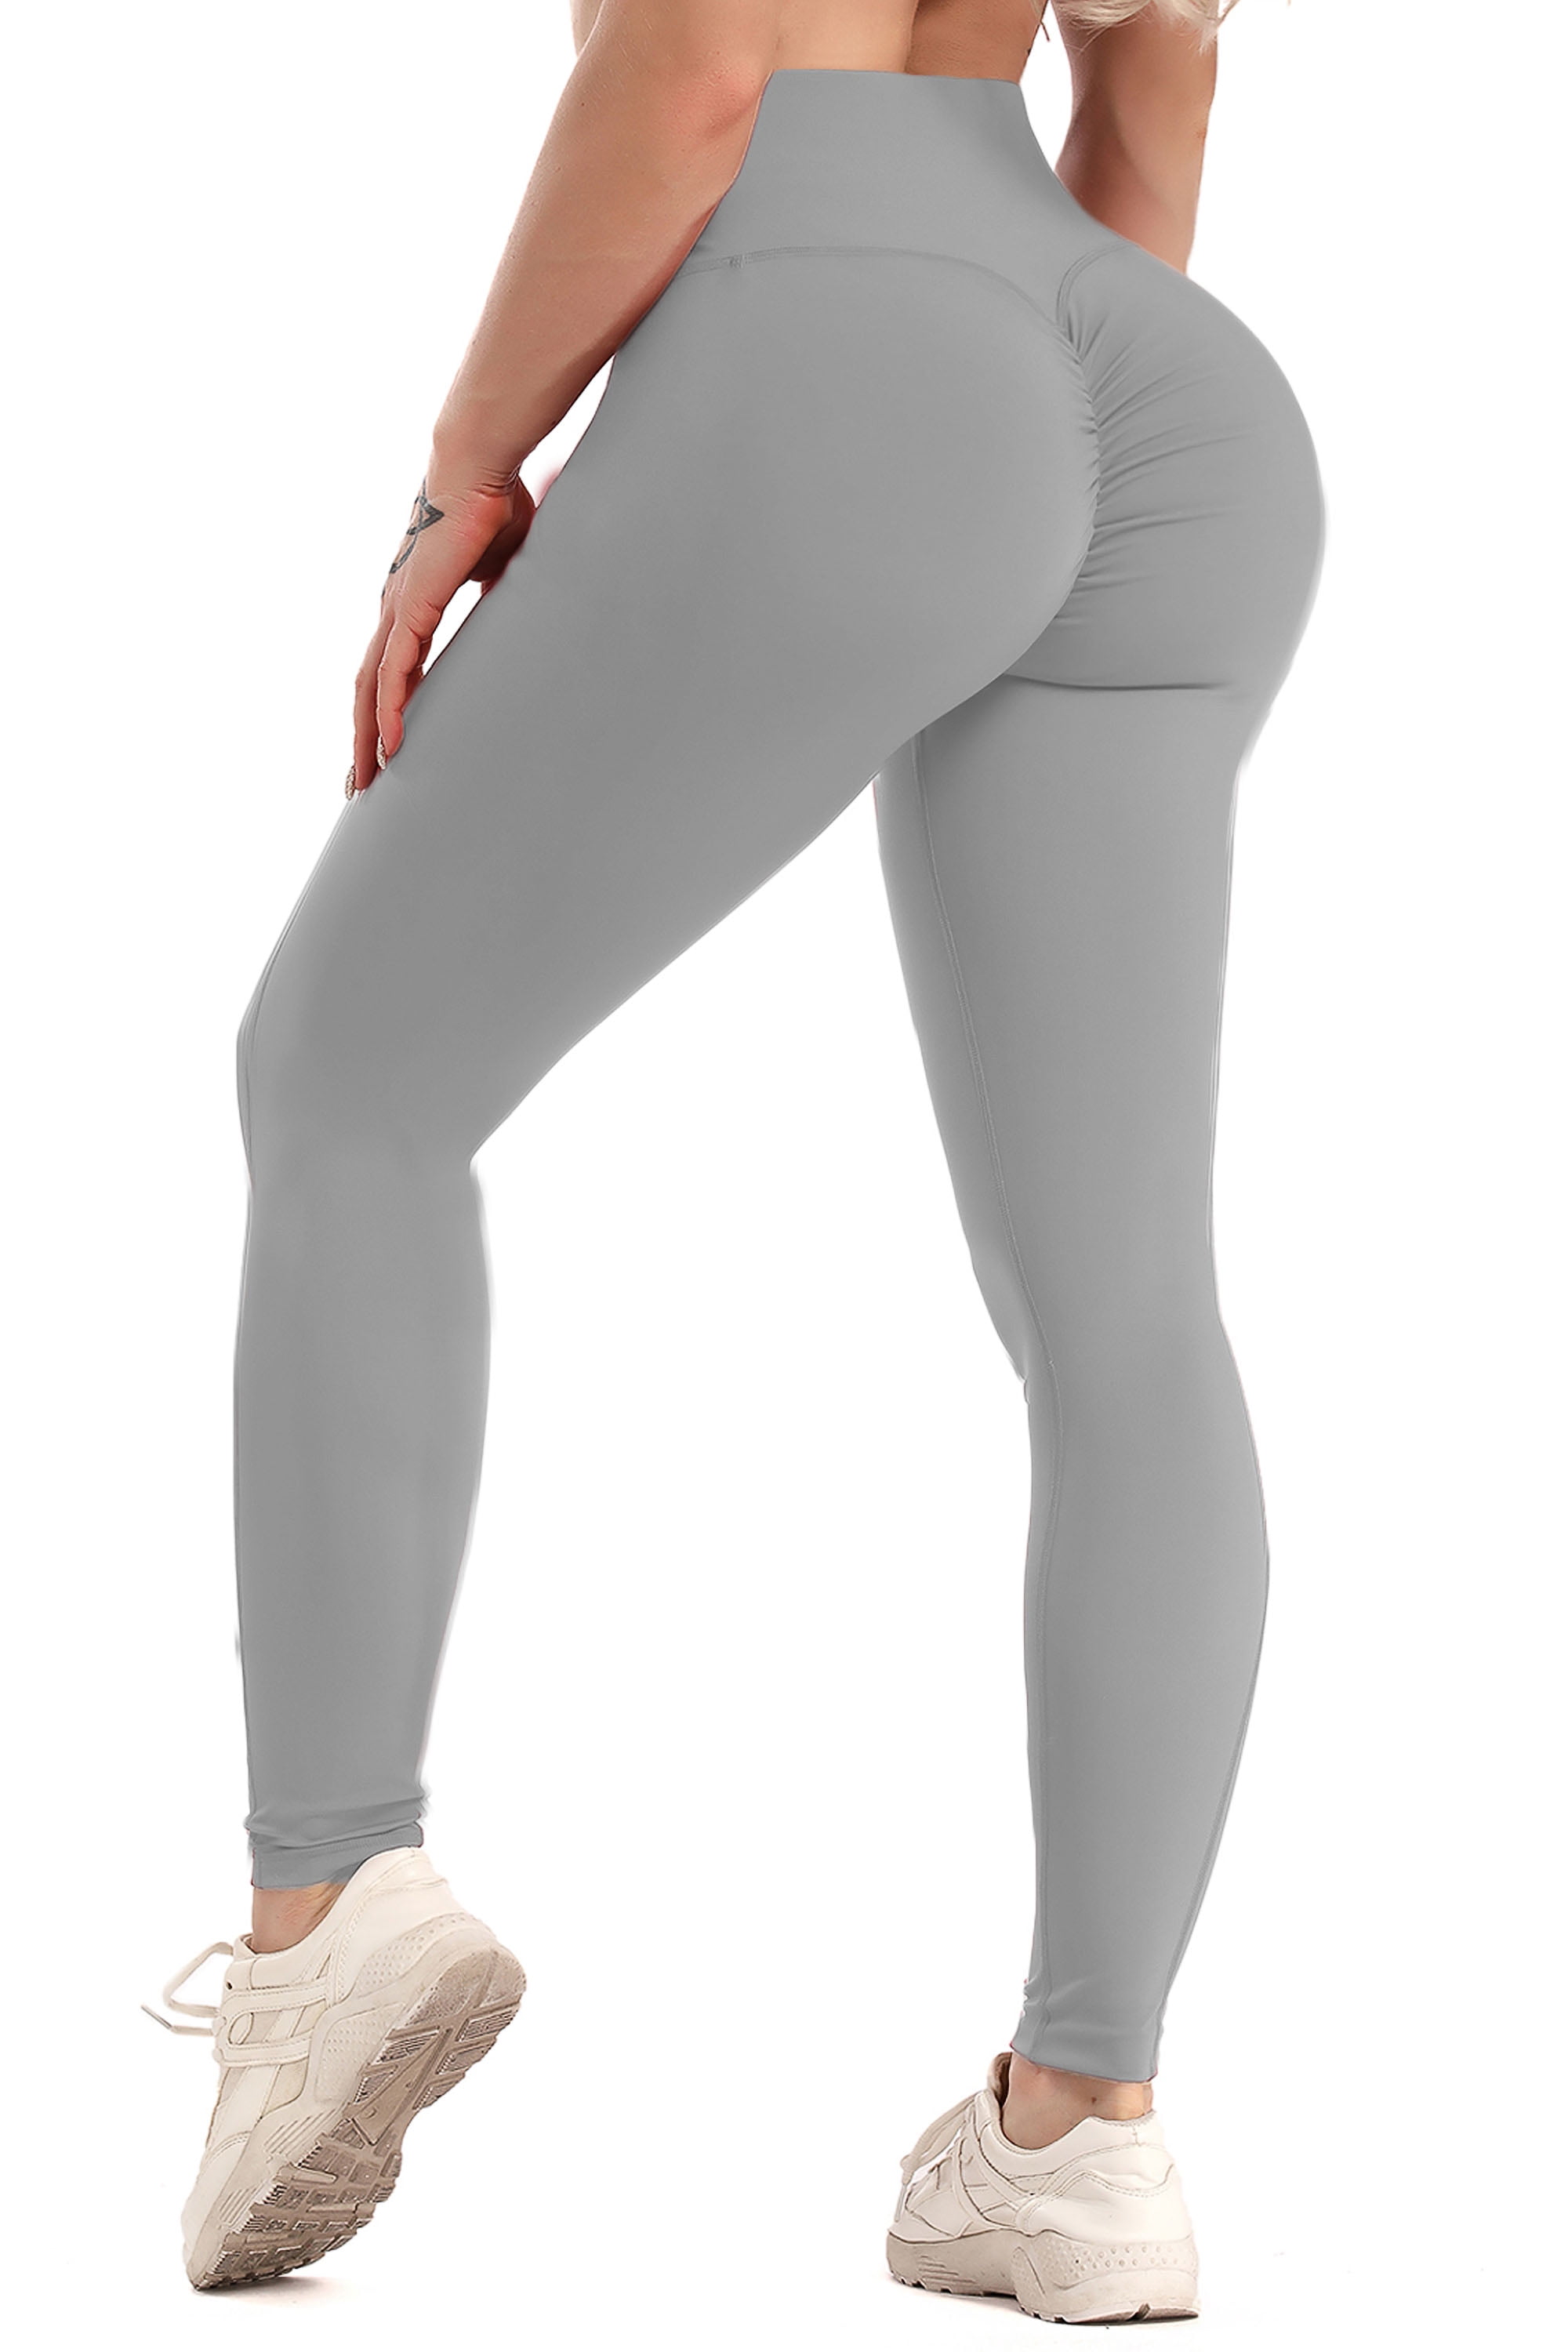 Women's Butt Lift Yoga Pants Hip Push Up Leggings Fitness Gym Workout Sportswear 